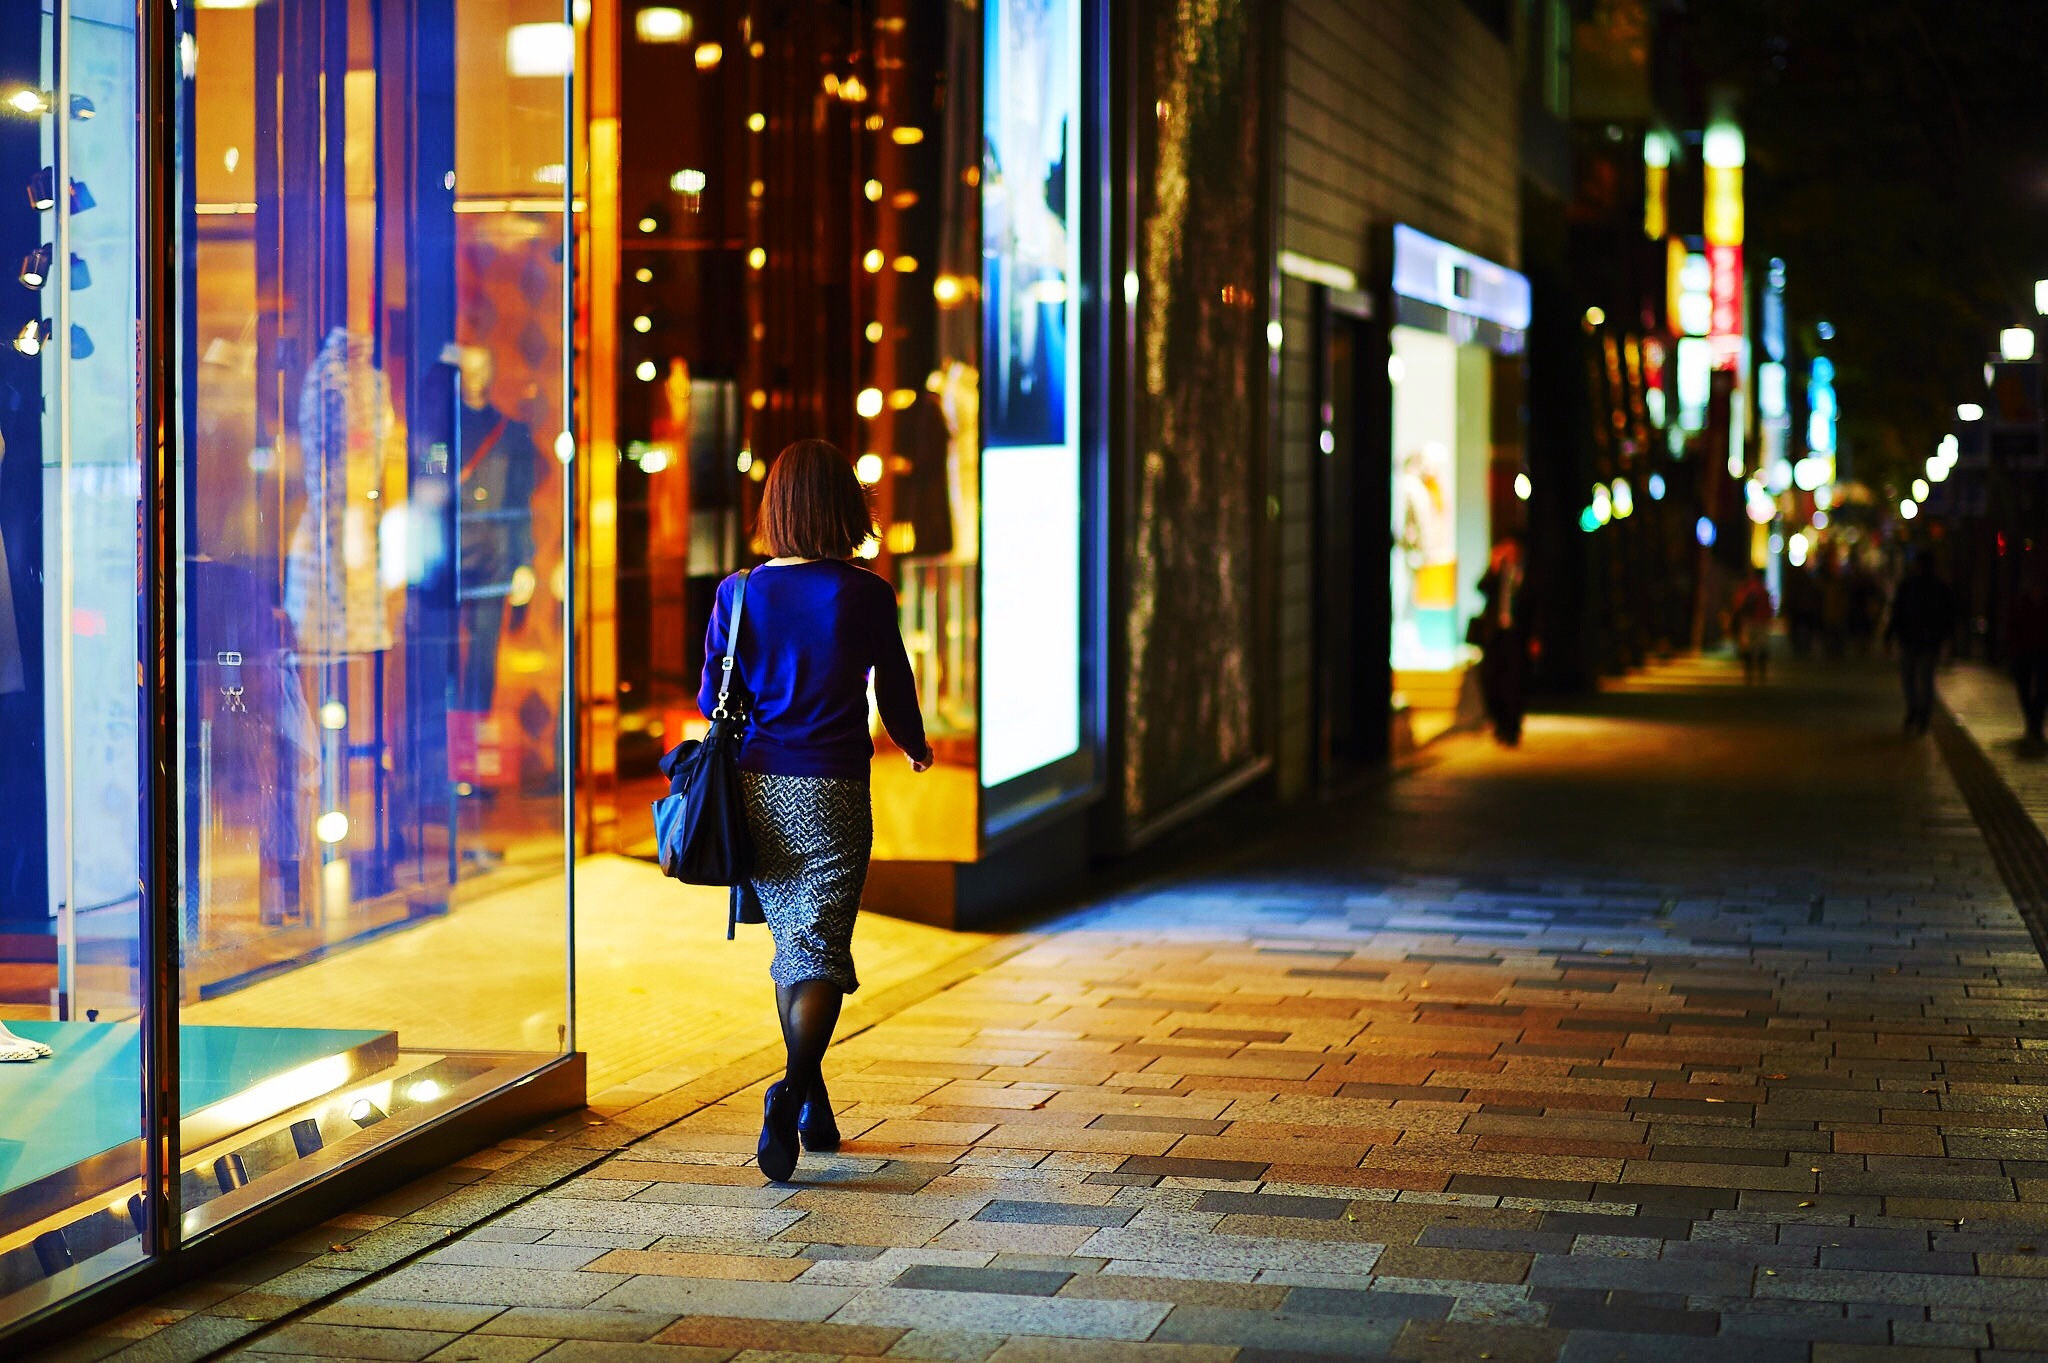 A woman walking along a city street at night